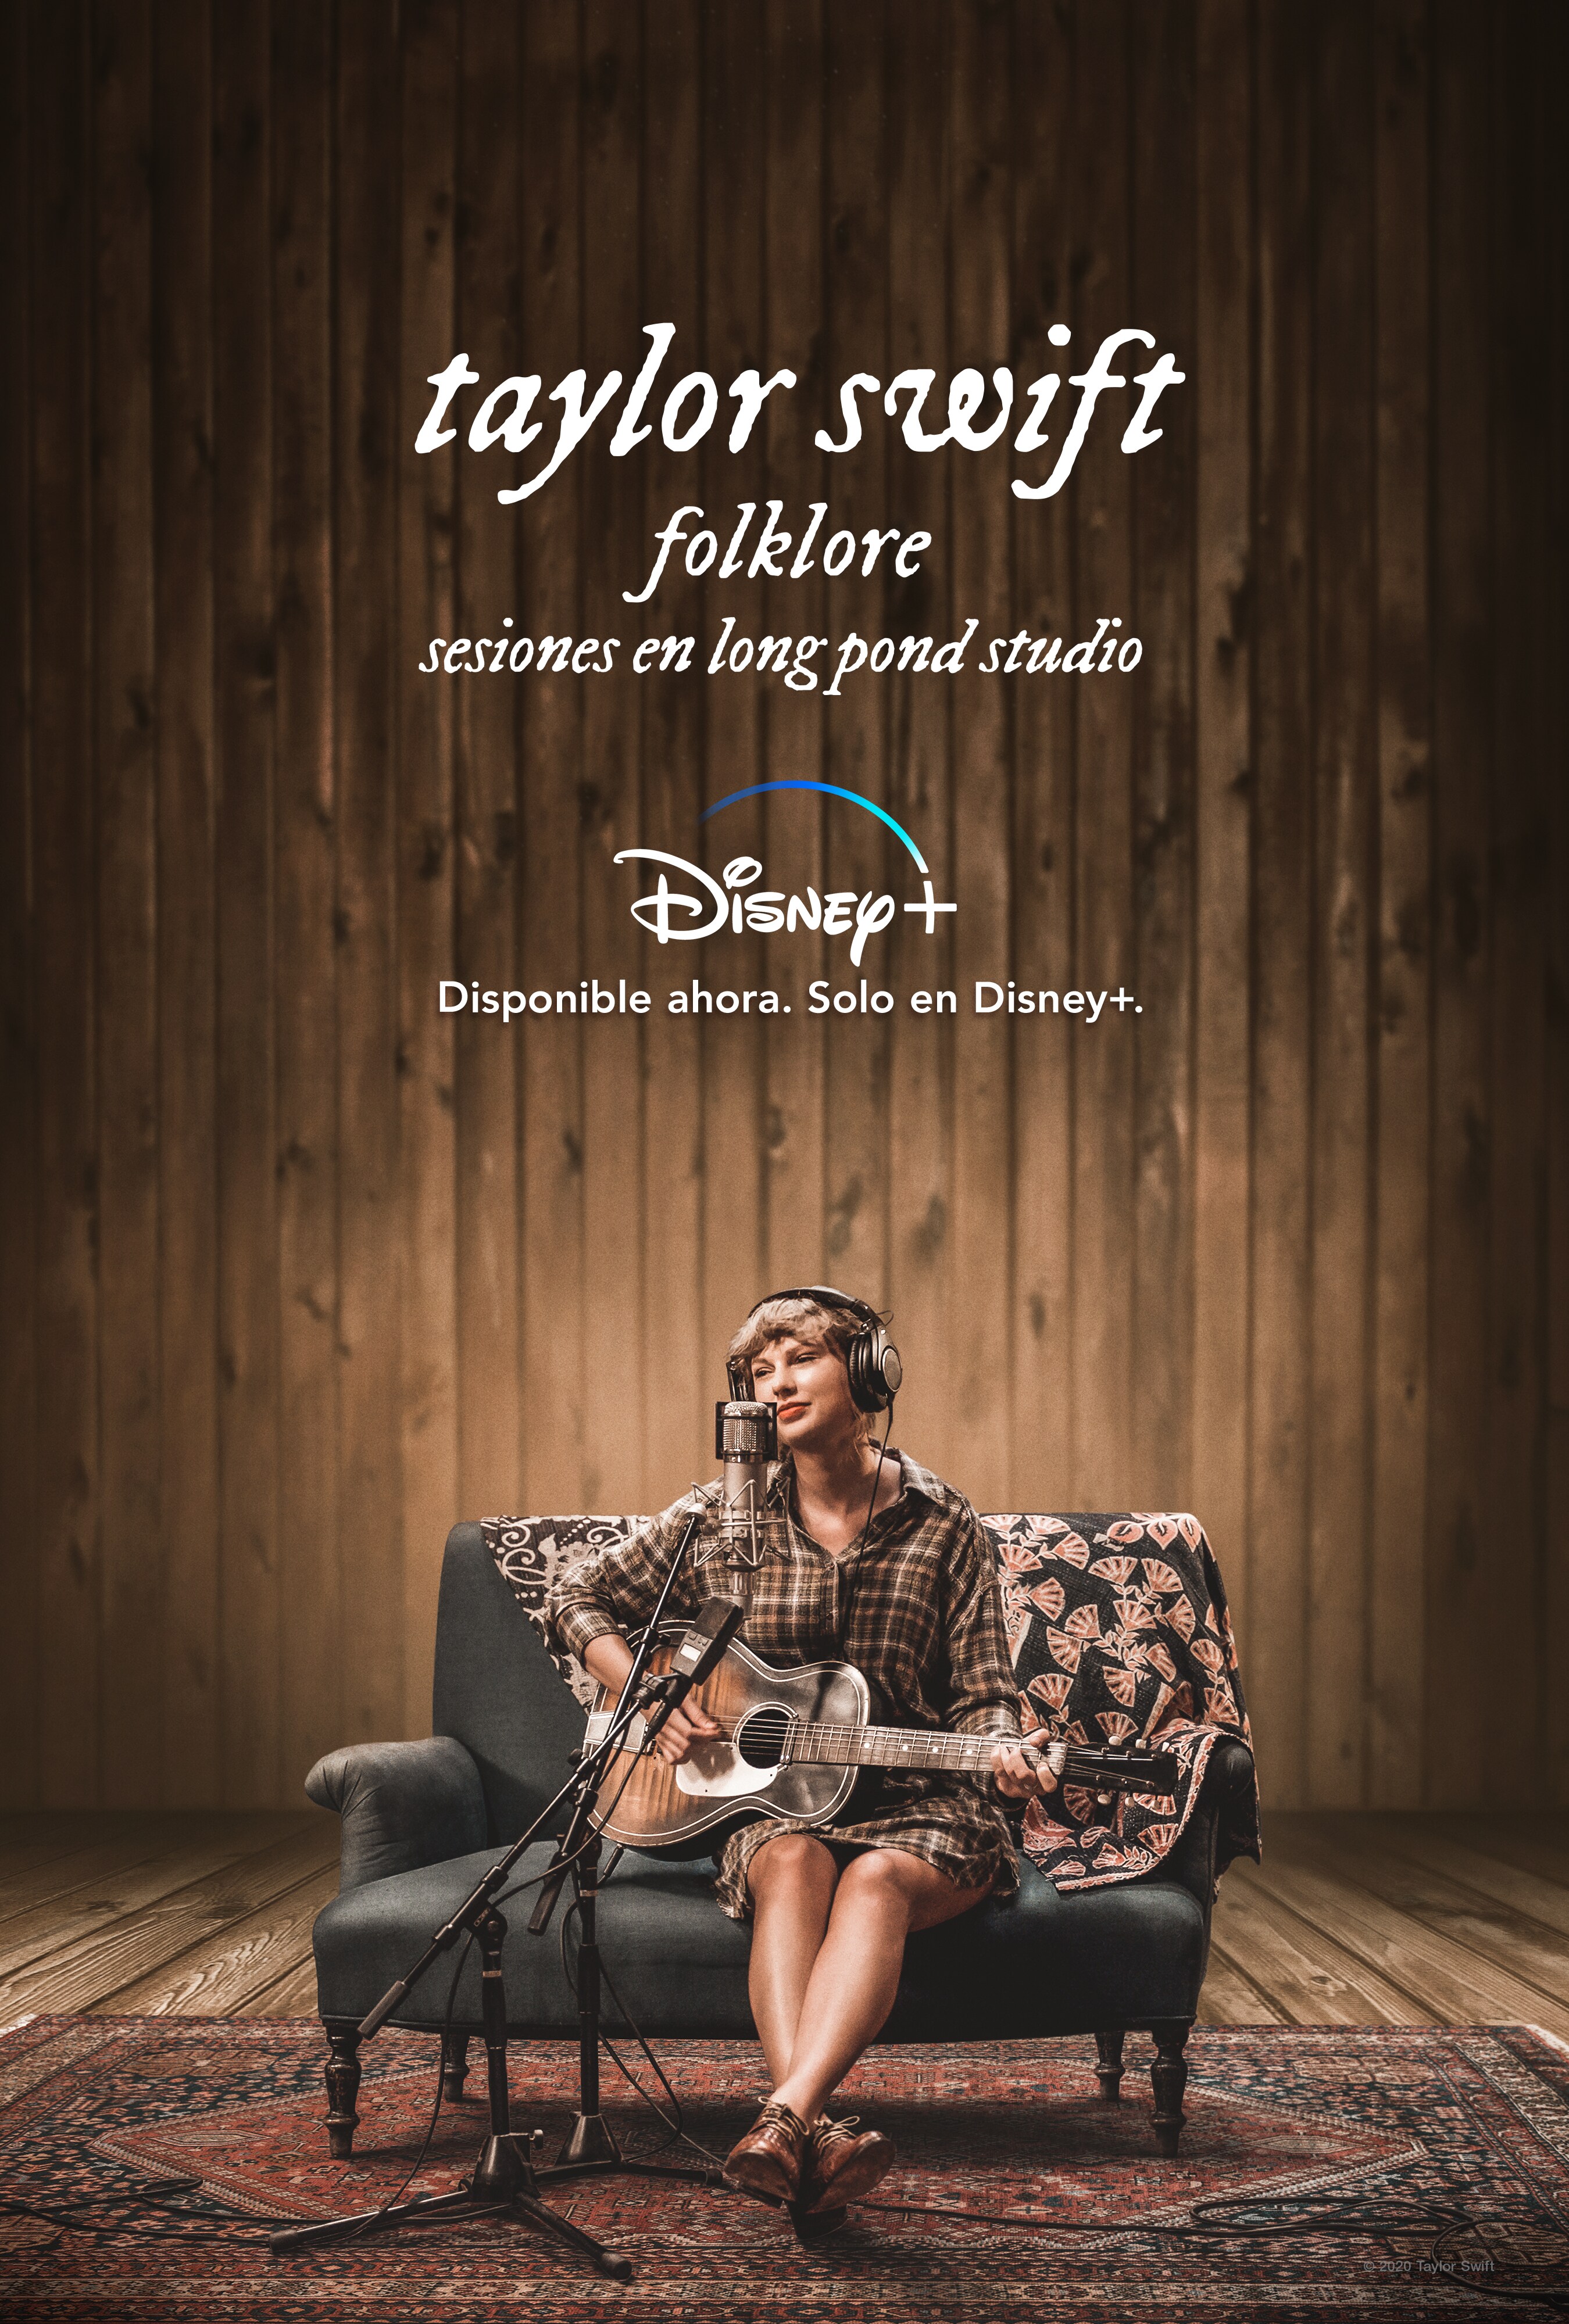 Taylor Swift - folklore: sesiones en long pond studio 